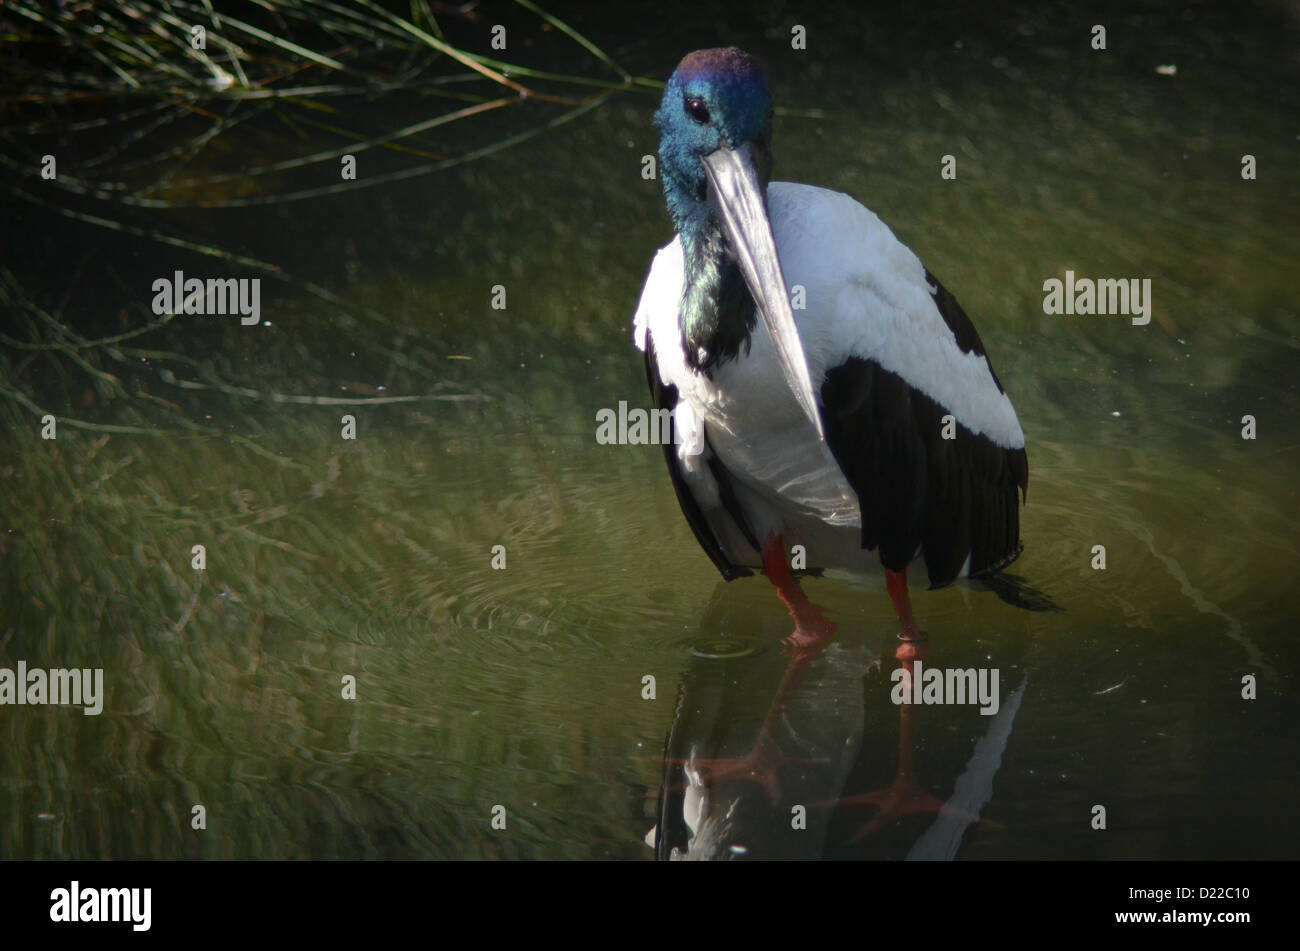 Jabiru Bird Stood in Water Stock Photo